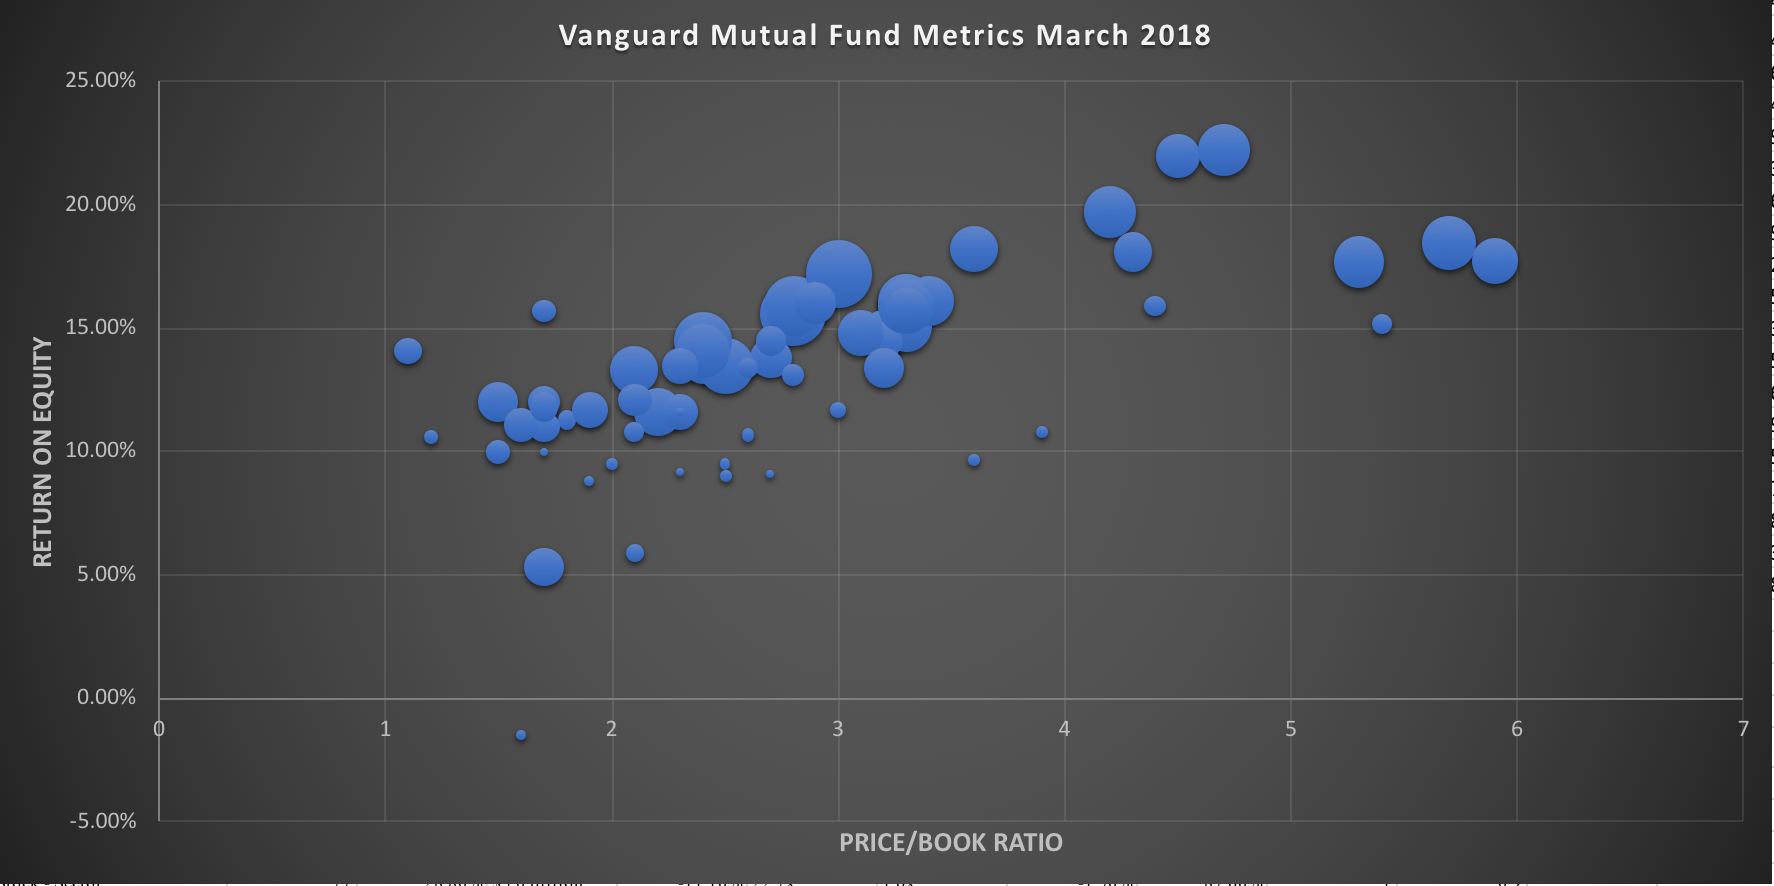 Vanguard Stock Mutual Funds PB vs ROE ratios March 2018